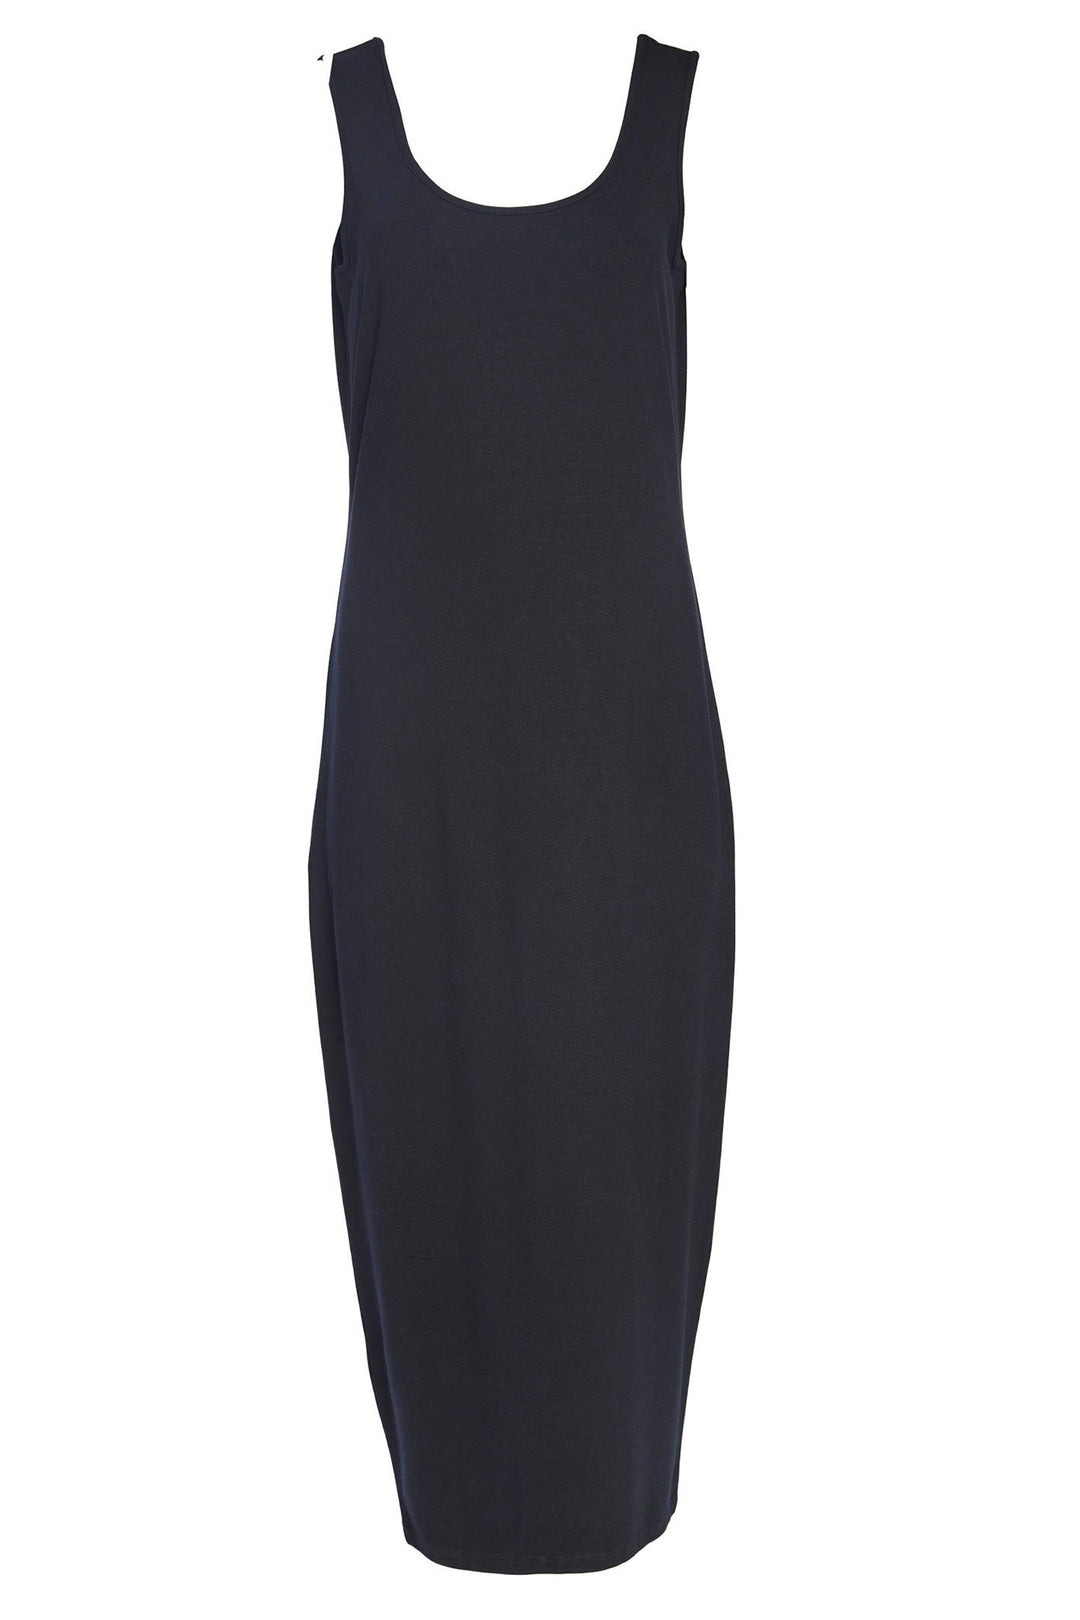 Naya NAS23 104 Black Jersey Sleeveless Dress